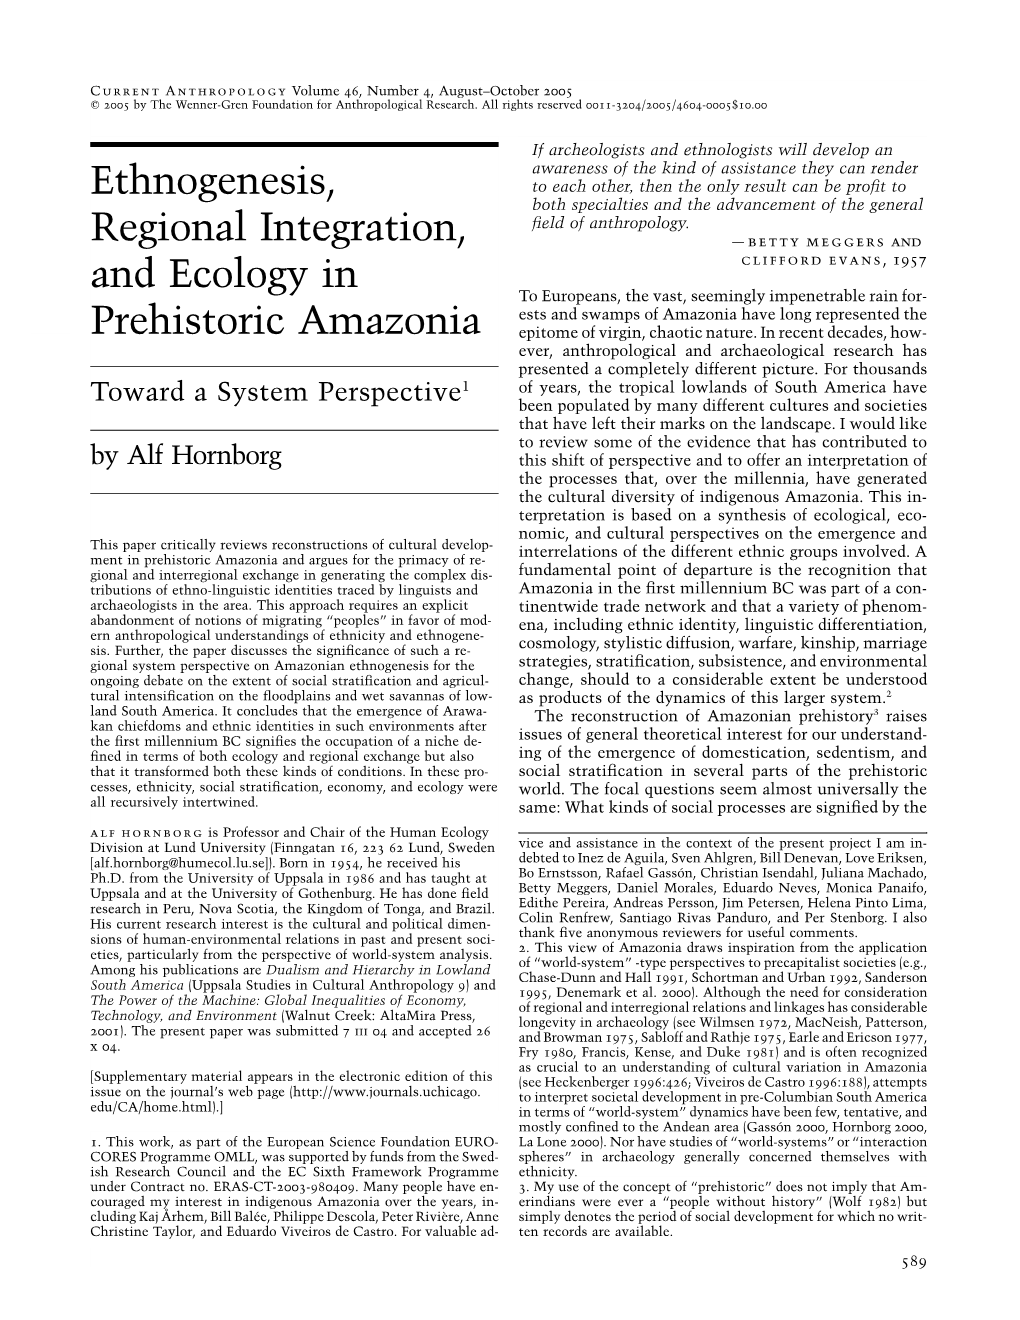 Ethnogenesis, Regional Integration, and Ecology in Prehistoric Amazonia